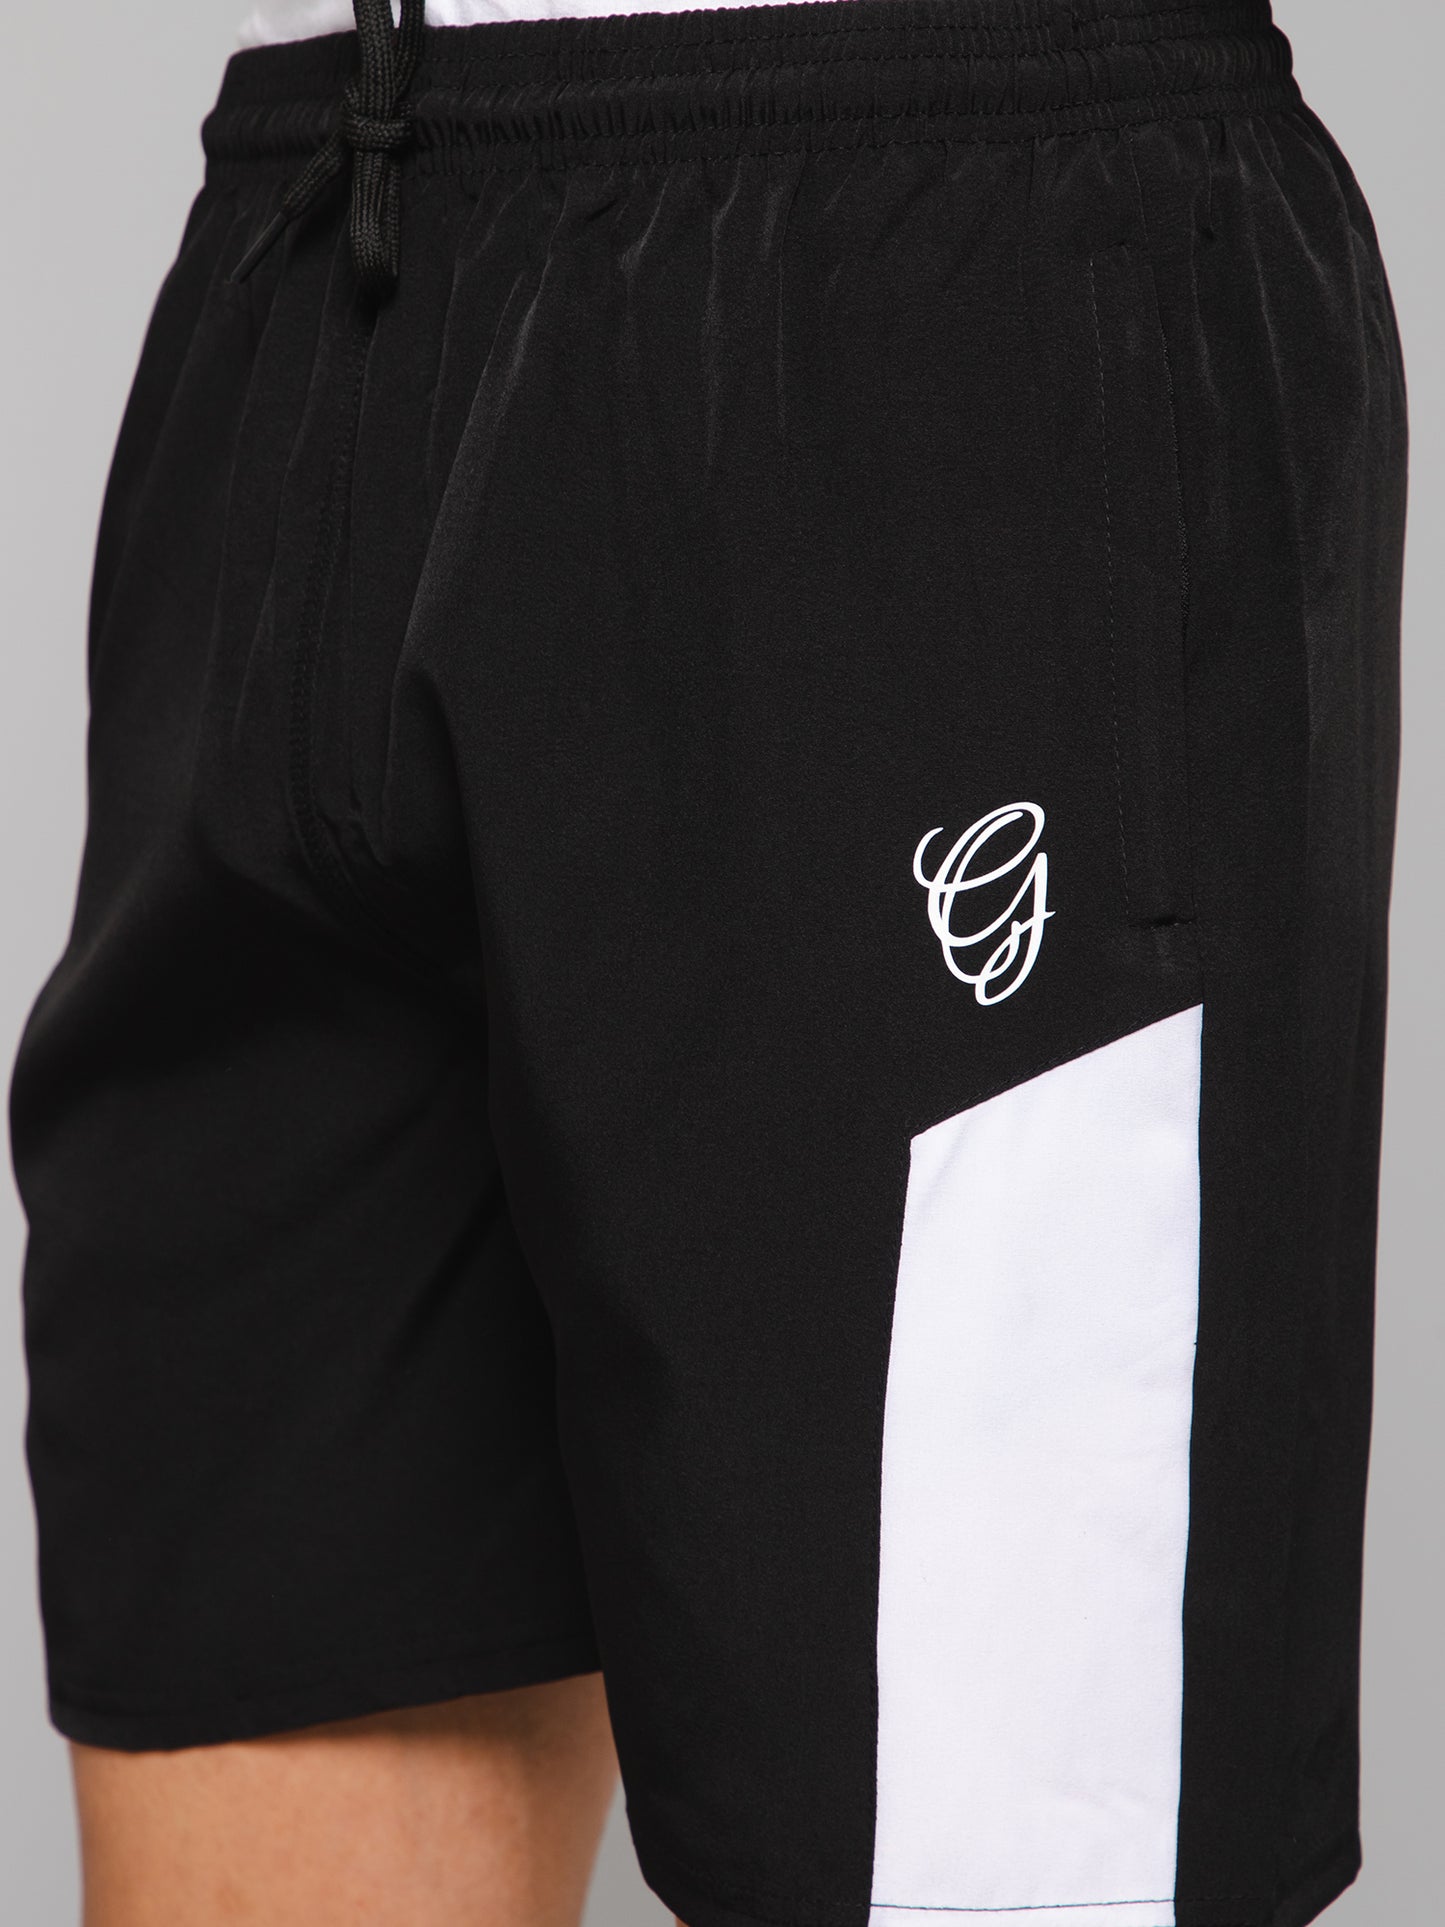 Black Color Block Shorts